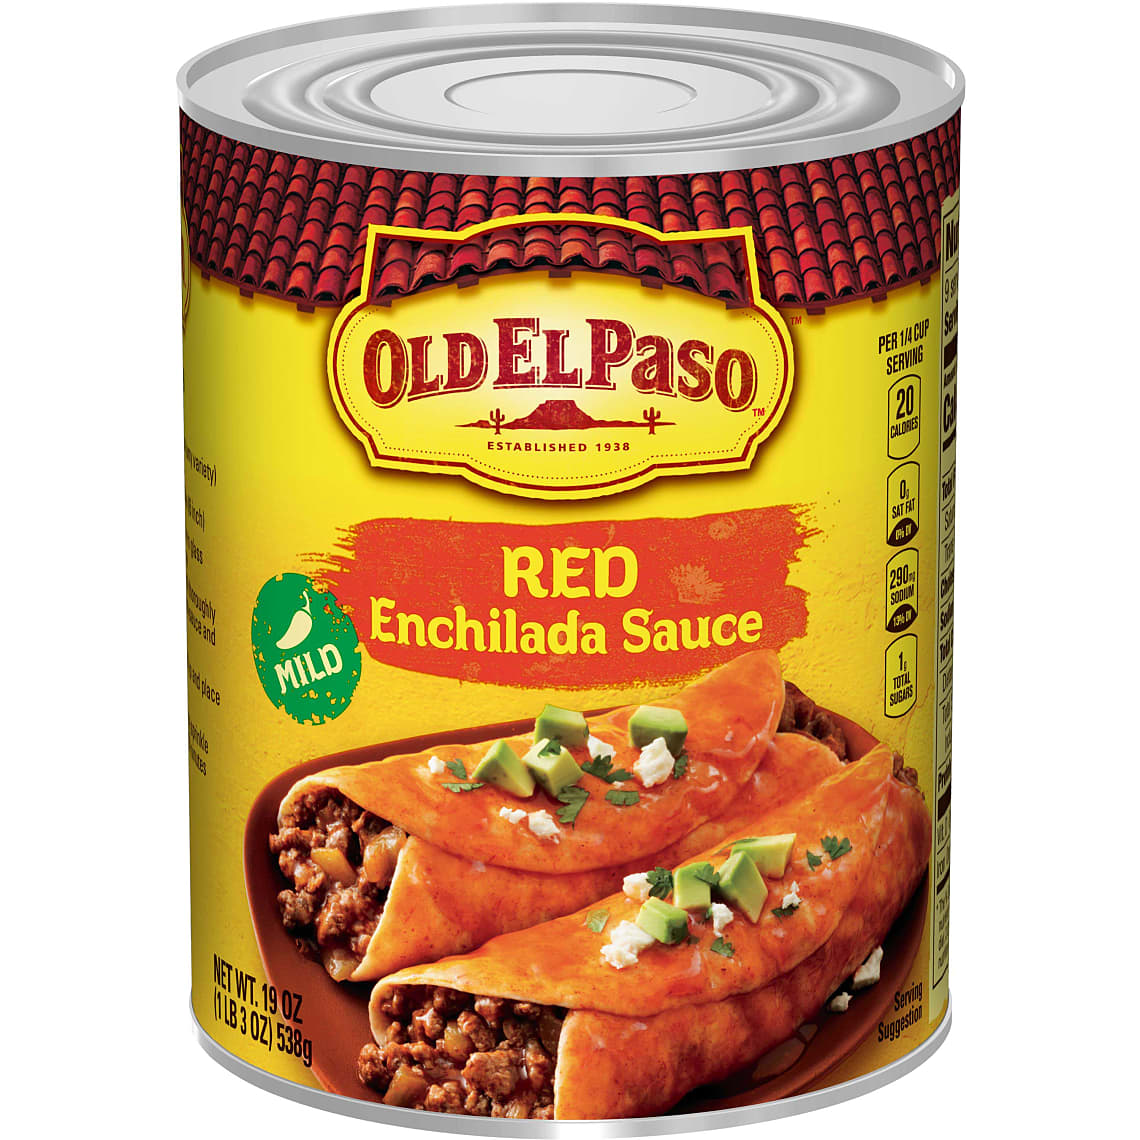 Old El Paso Enchilada Sauce, Mild, Red, 19 oz Can